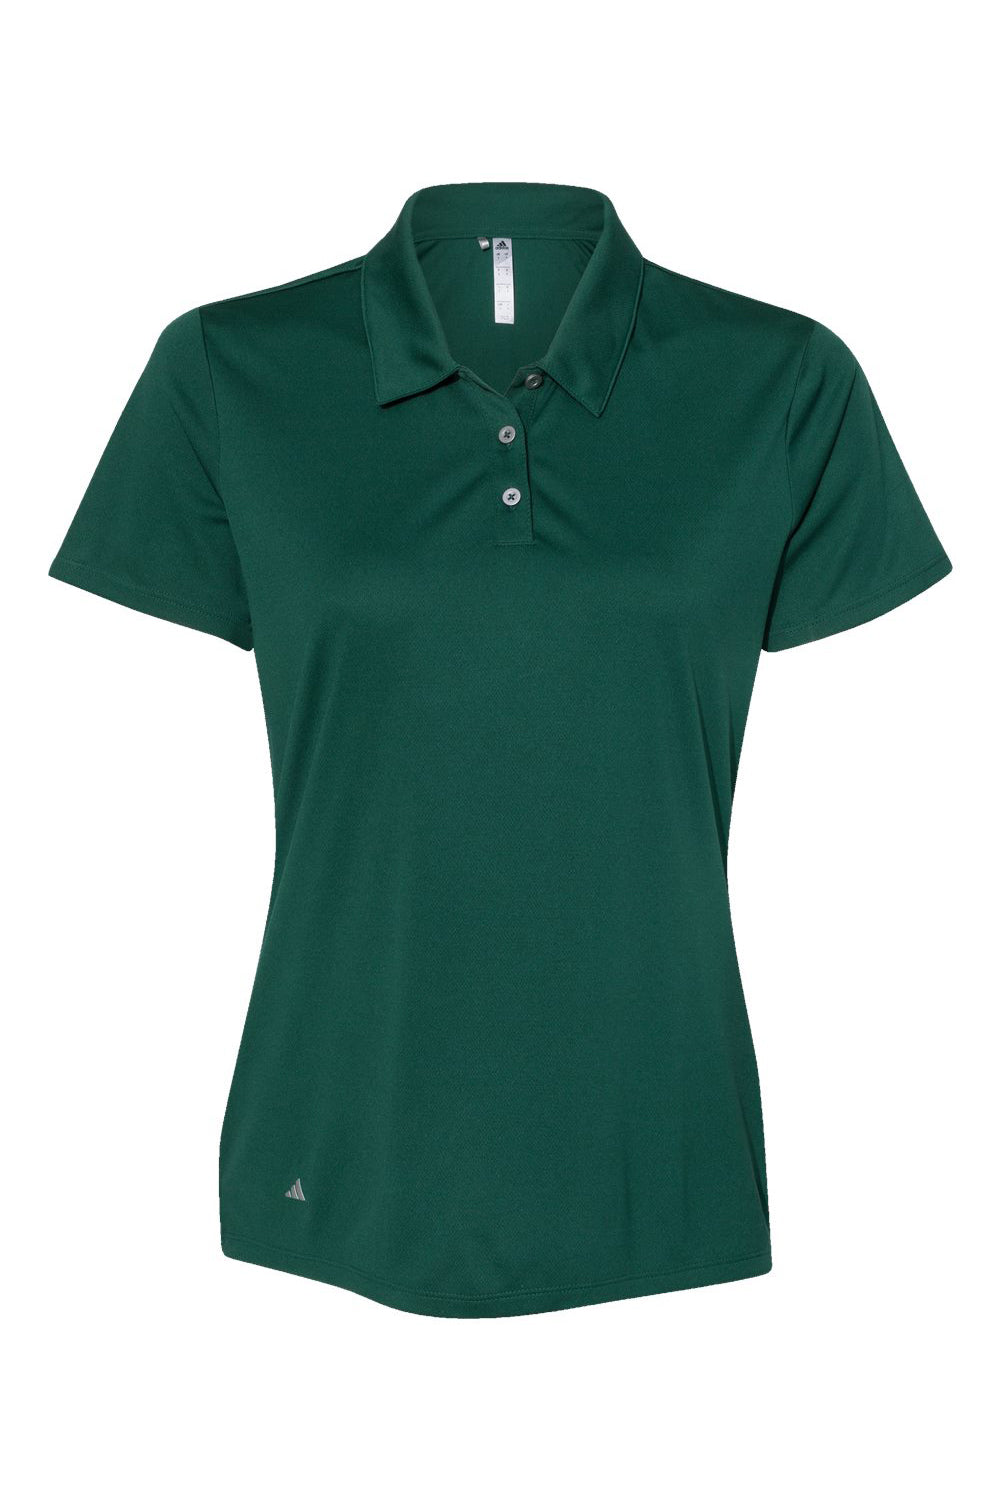 Adidas A231 Womens Performance Short Sleeve Polo Shirt Collegiate Green Flat Front